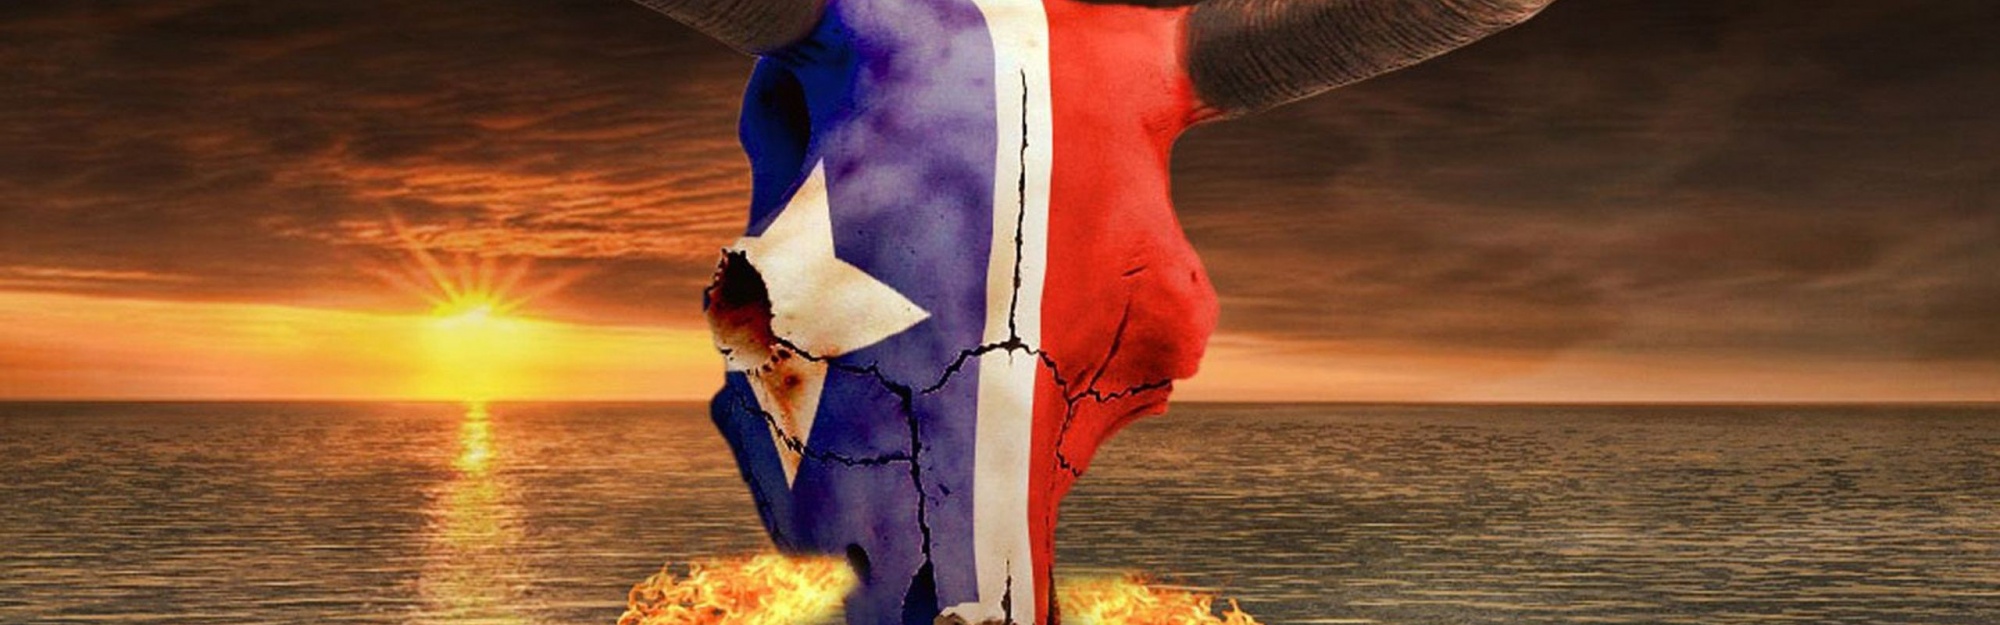 Houston Texans American Football Mascot Toro